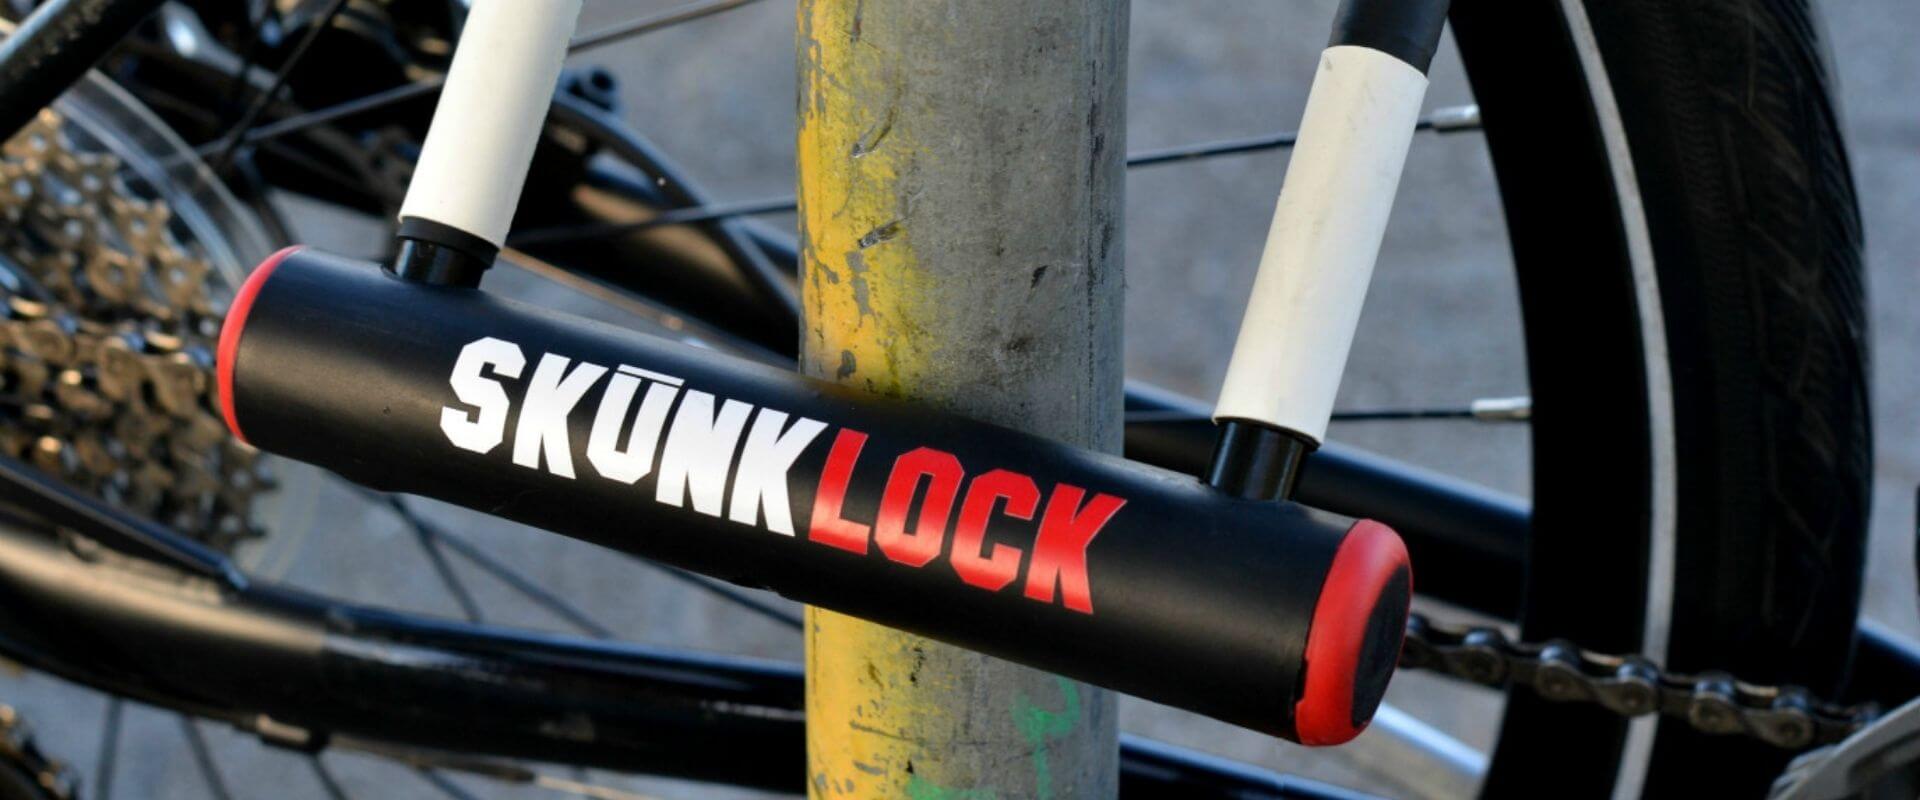 skunklock